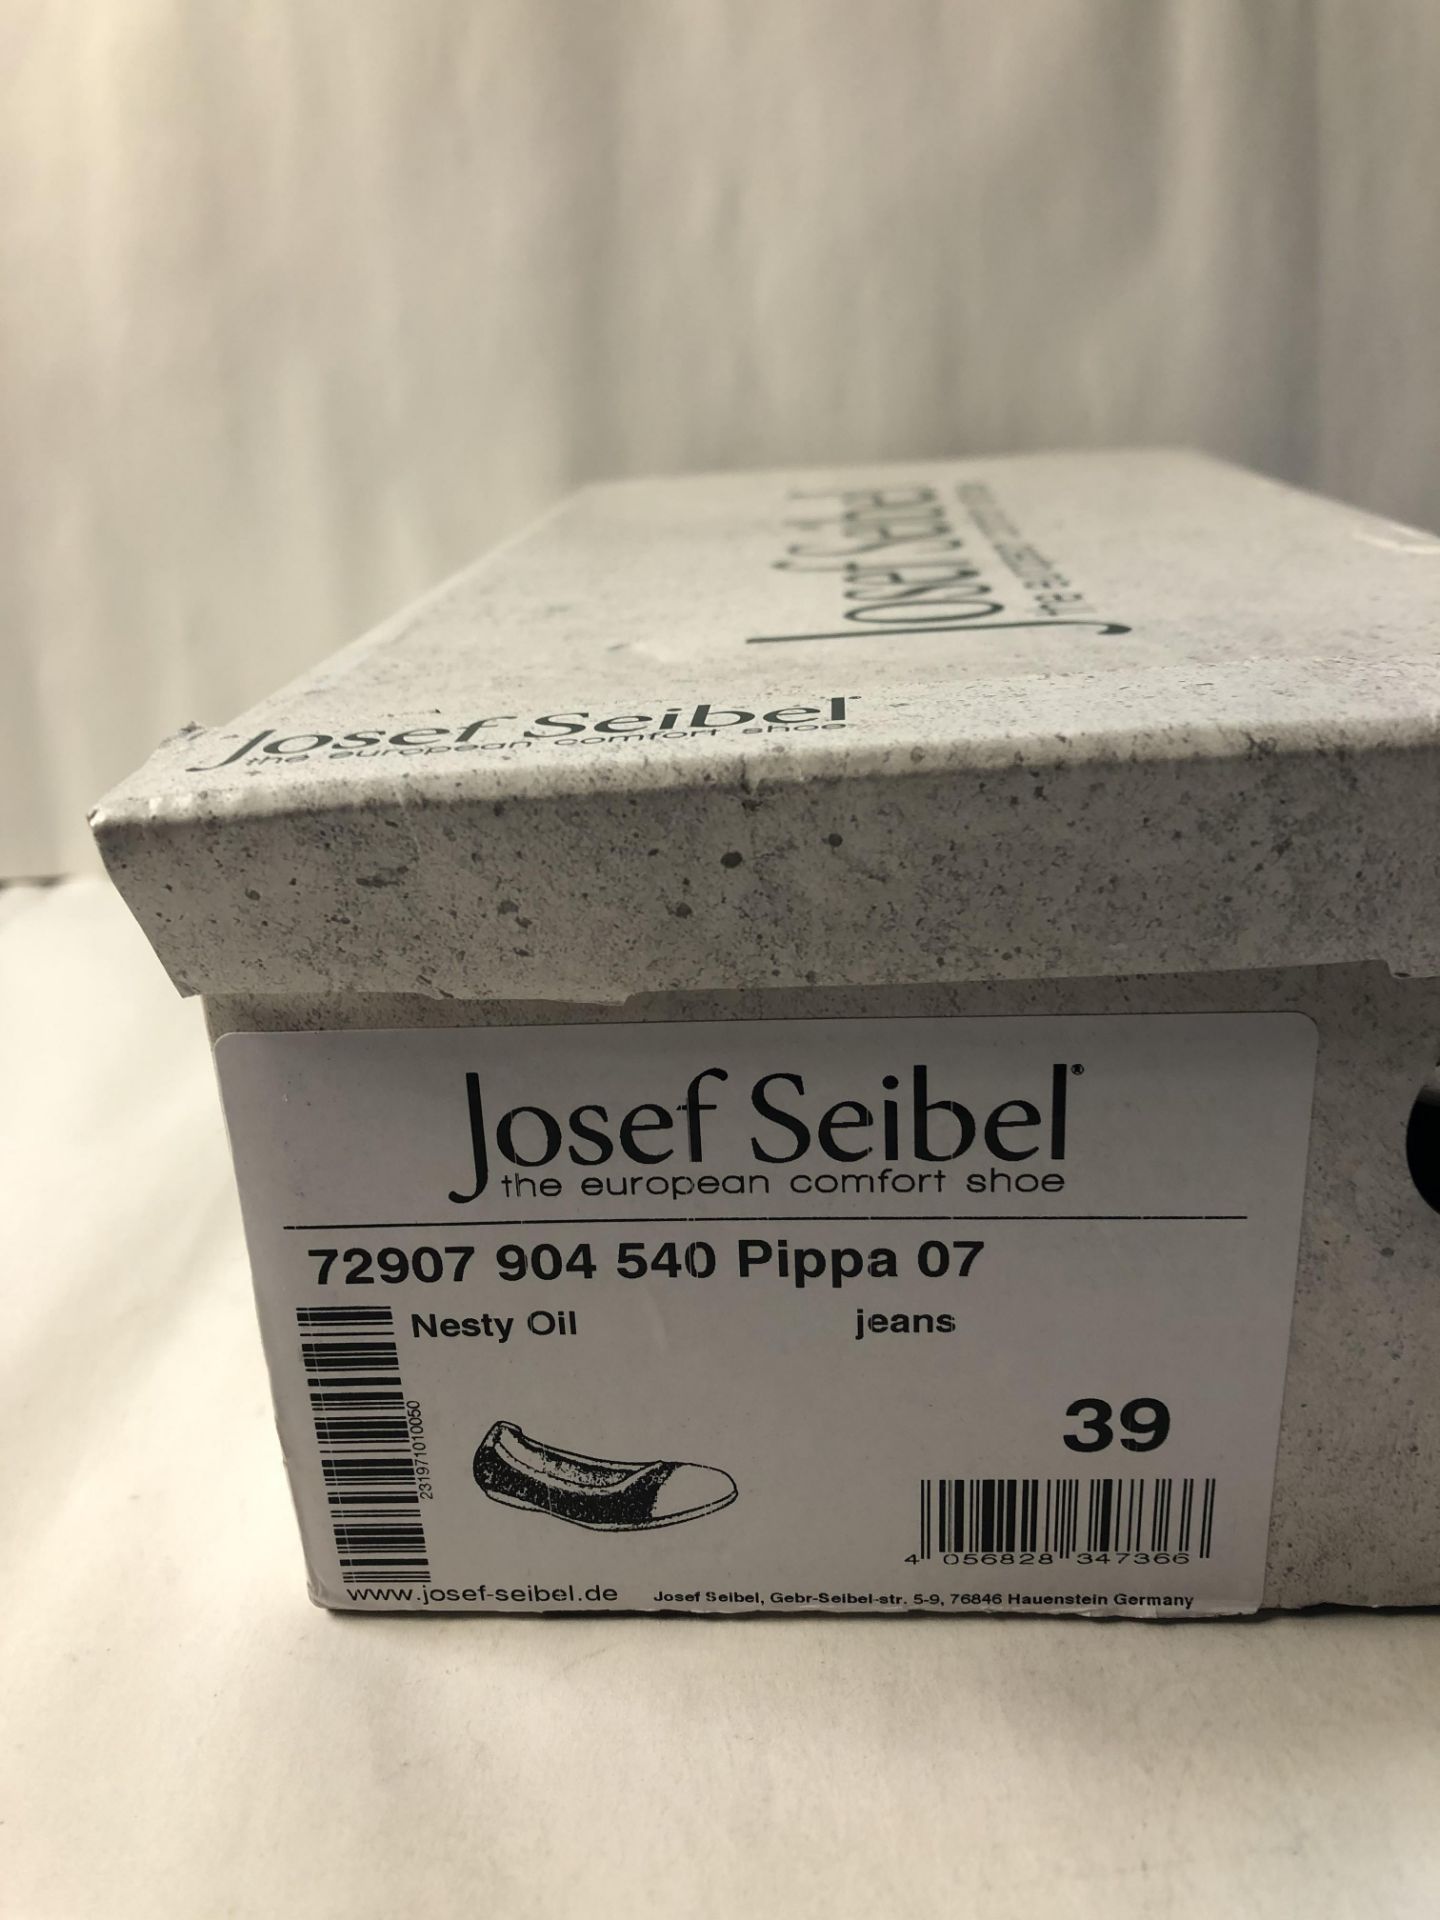 Josef Seibel Pippa 07 Shoes Jeans EU39 Jeans 6 UK Women’s Shoetique80377 |4056828347366 - Image 2 of 3